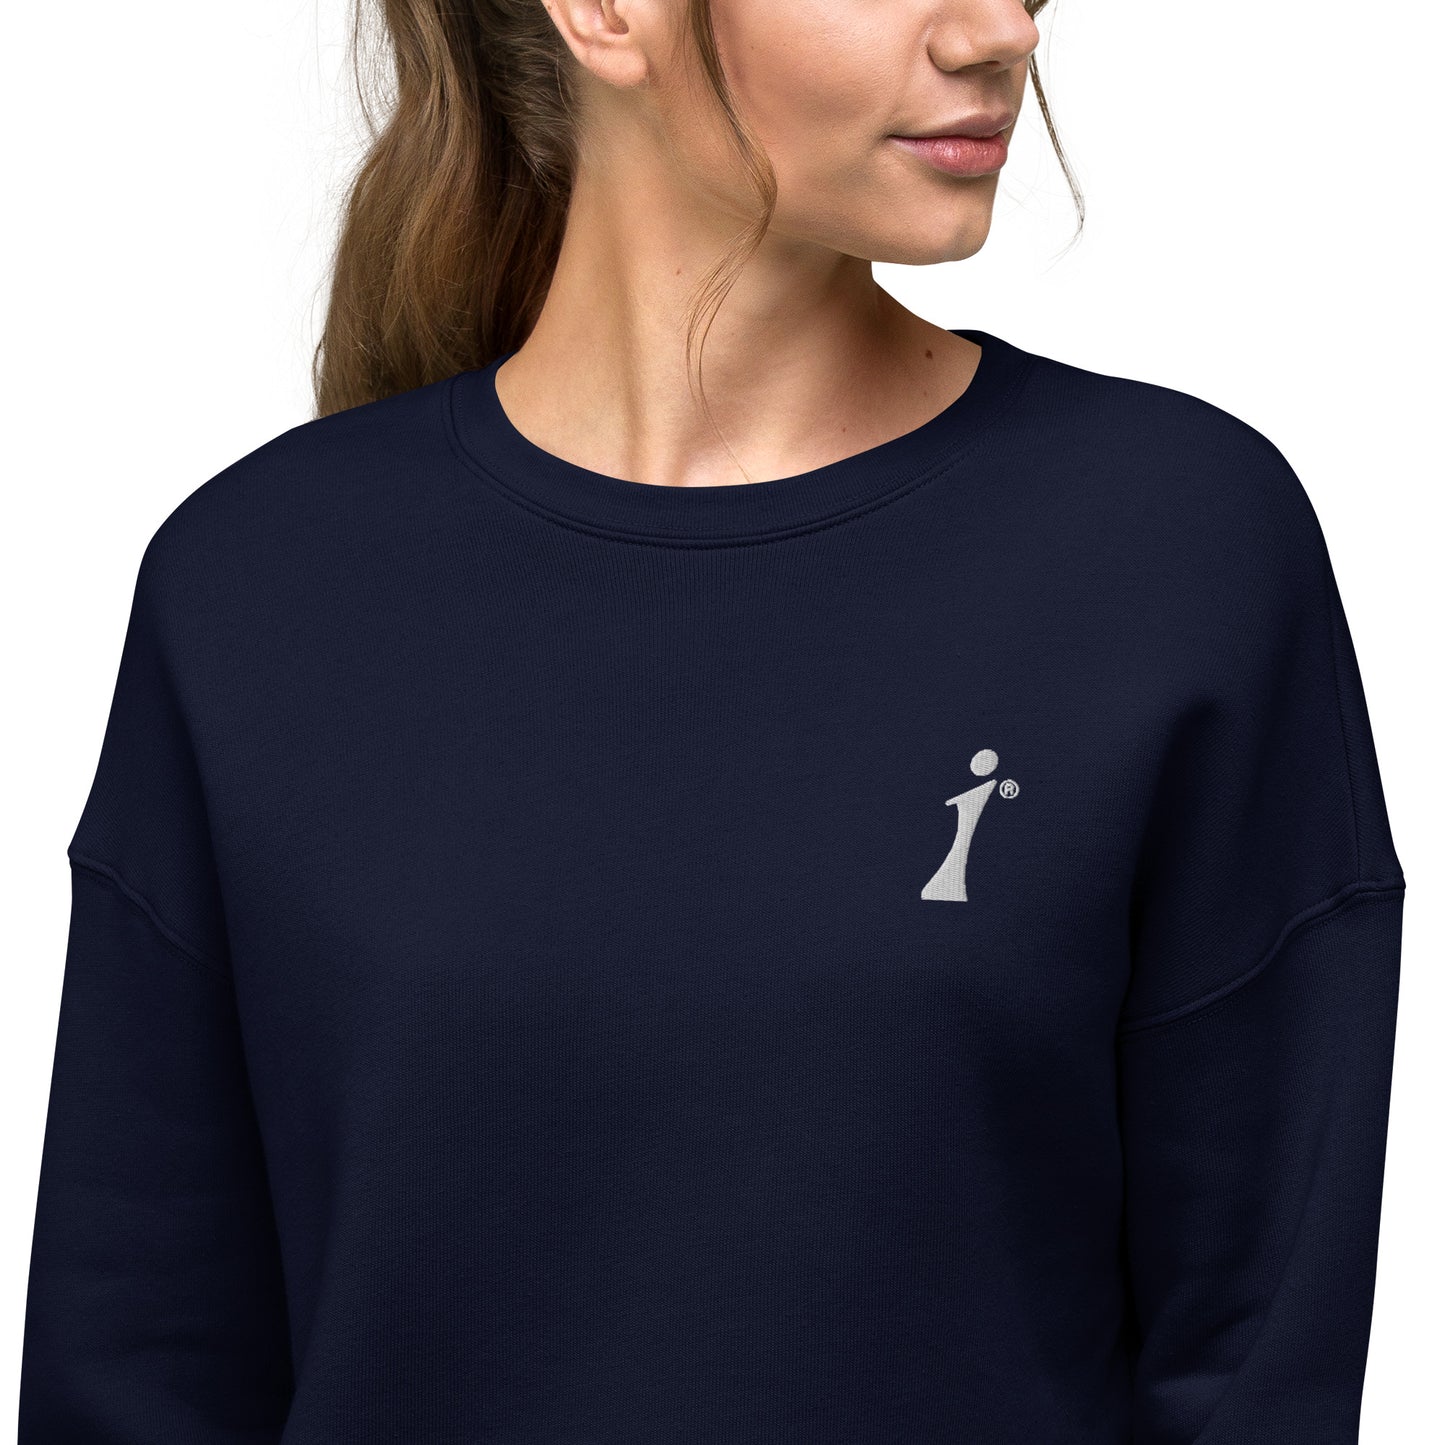 Embroidered “i” | Cropped Sweatshirt